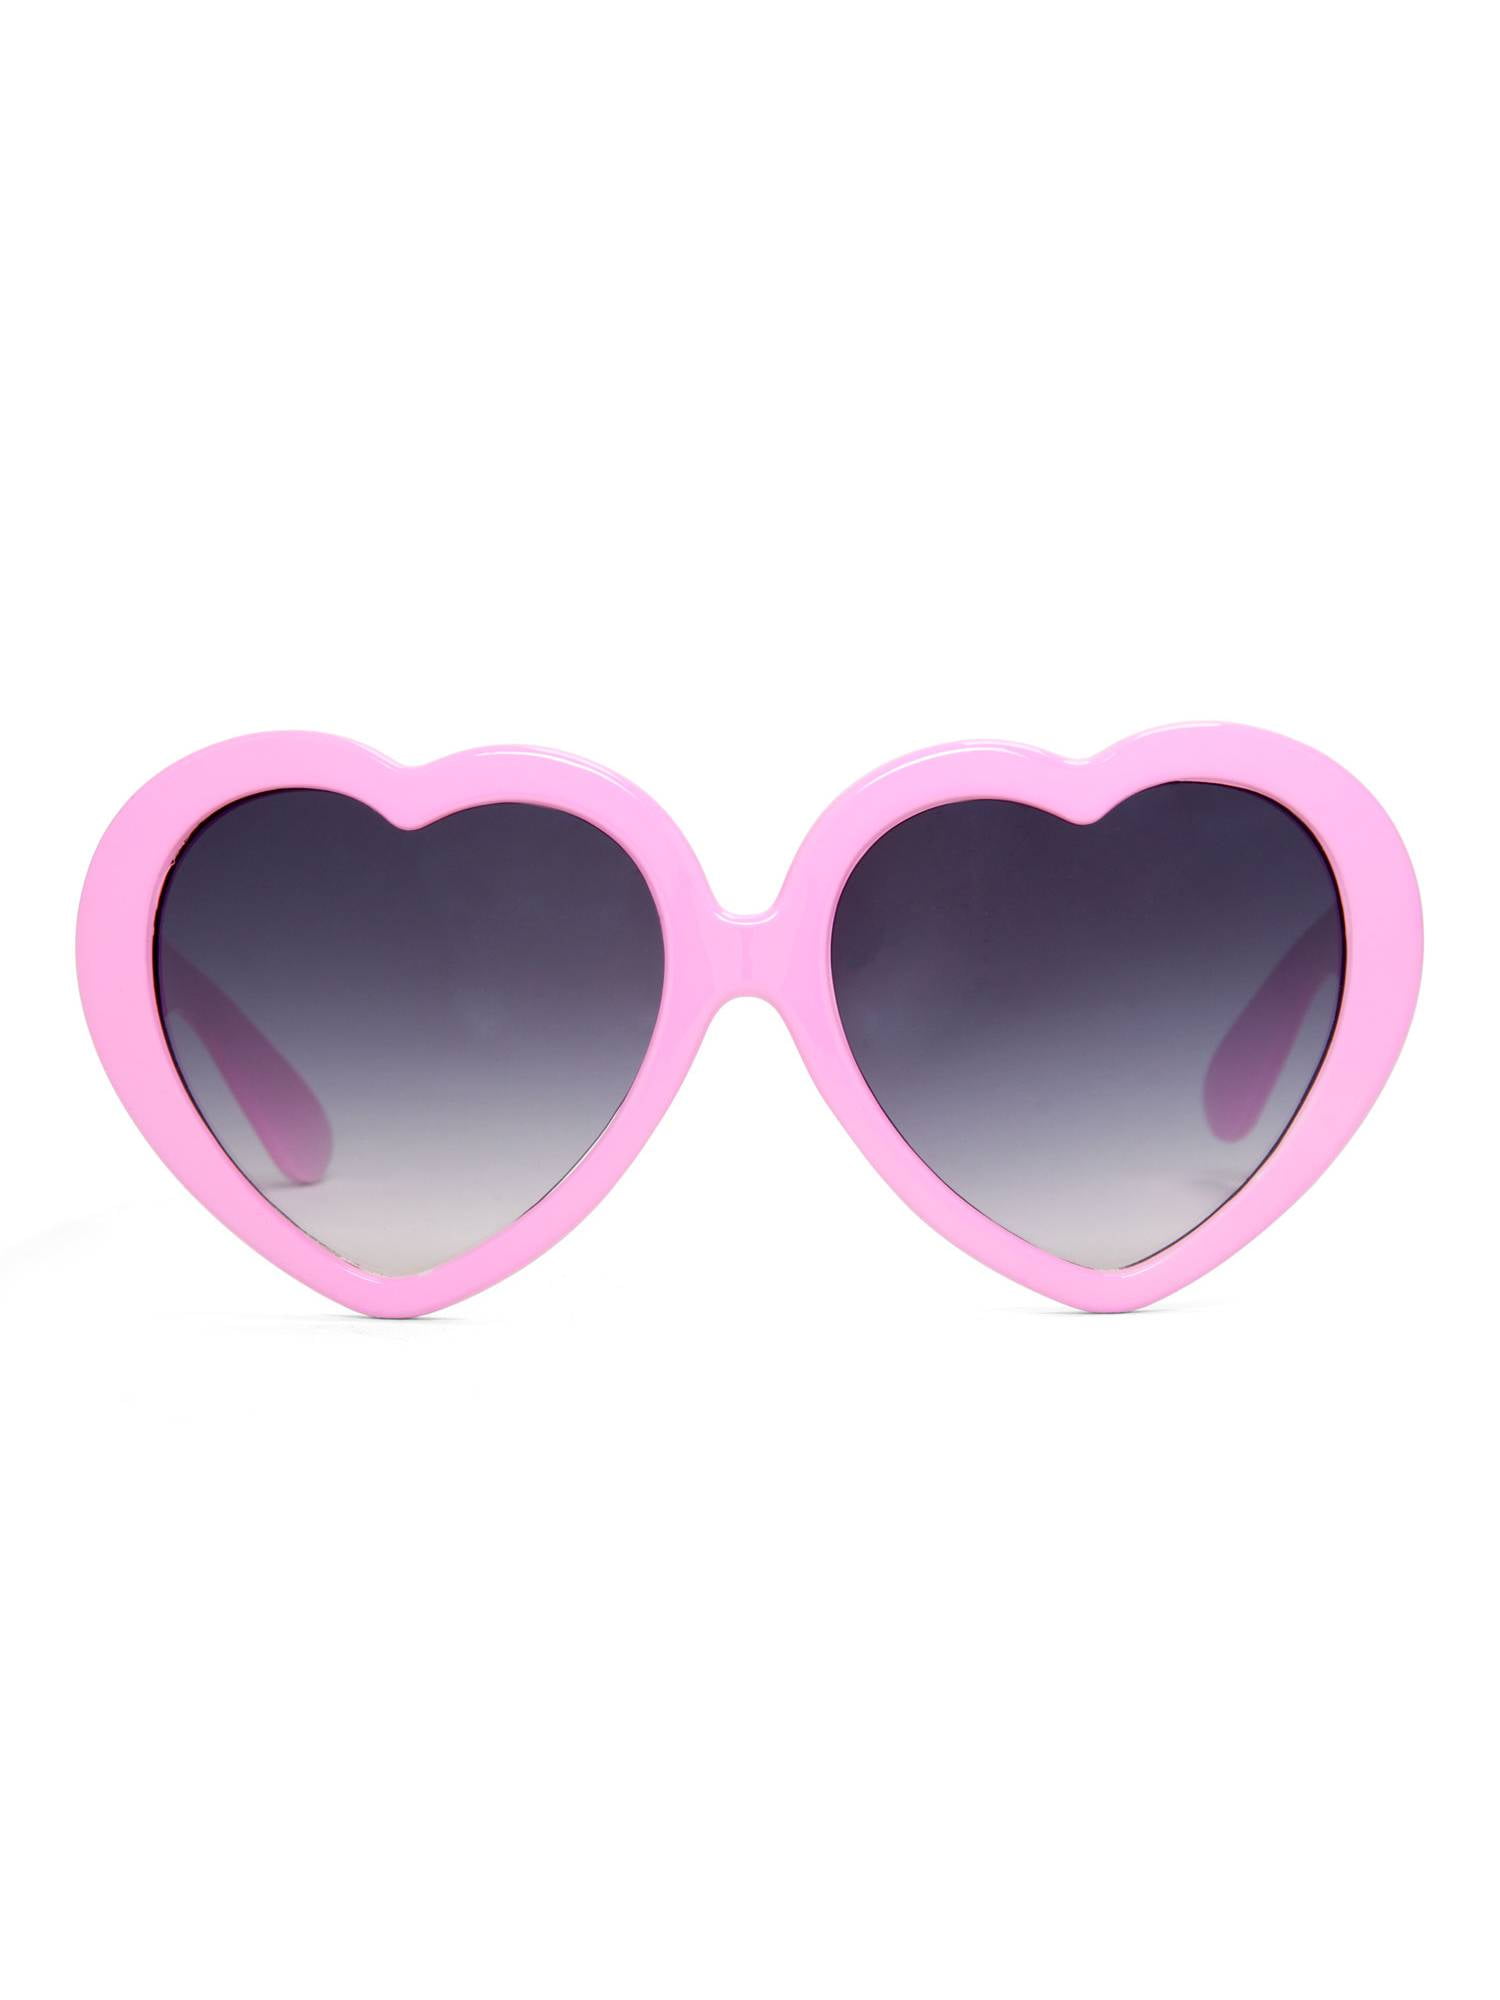 White Oversized Heart Sunglasses | High Fashion Statement Shades